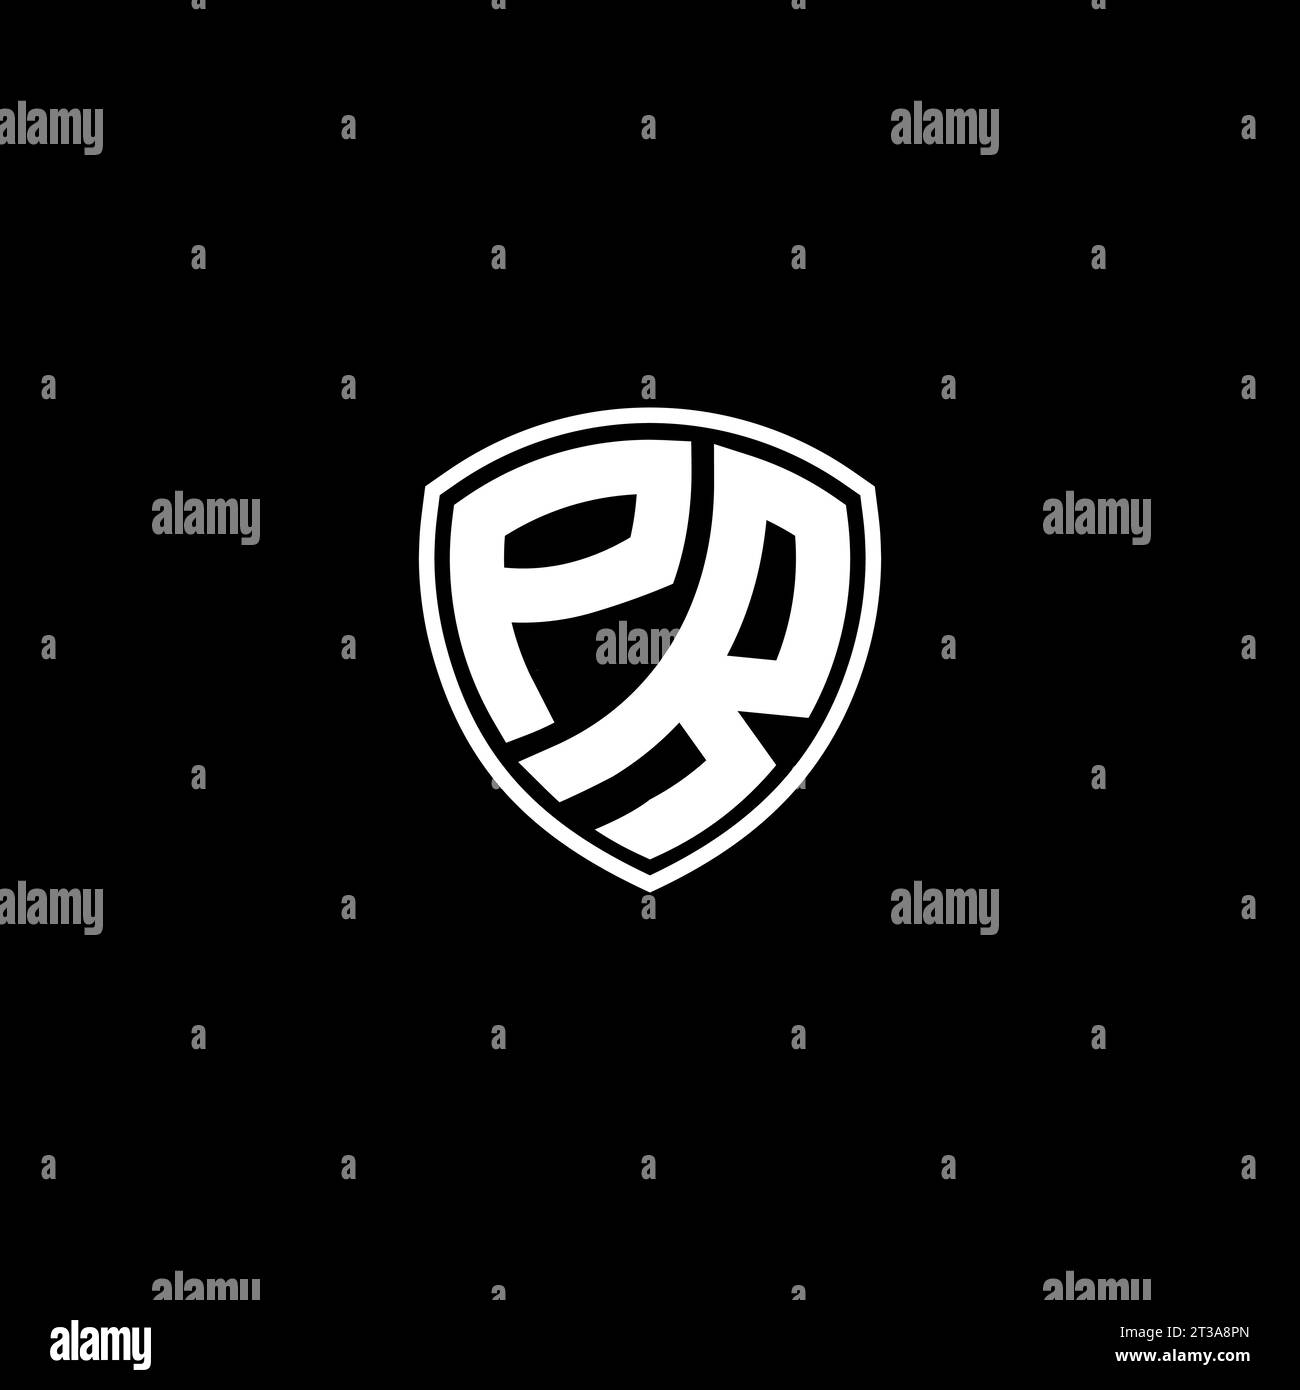 PR logo monogram emblem style with shield shape design template ideas Stock Vector